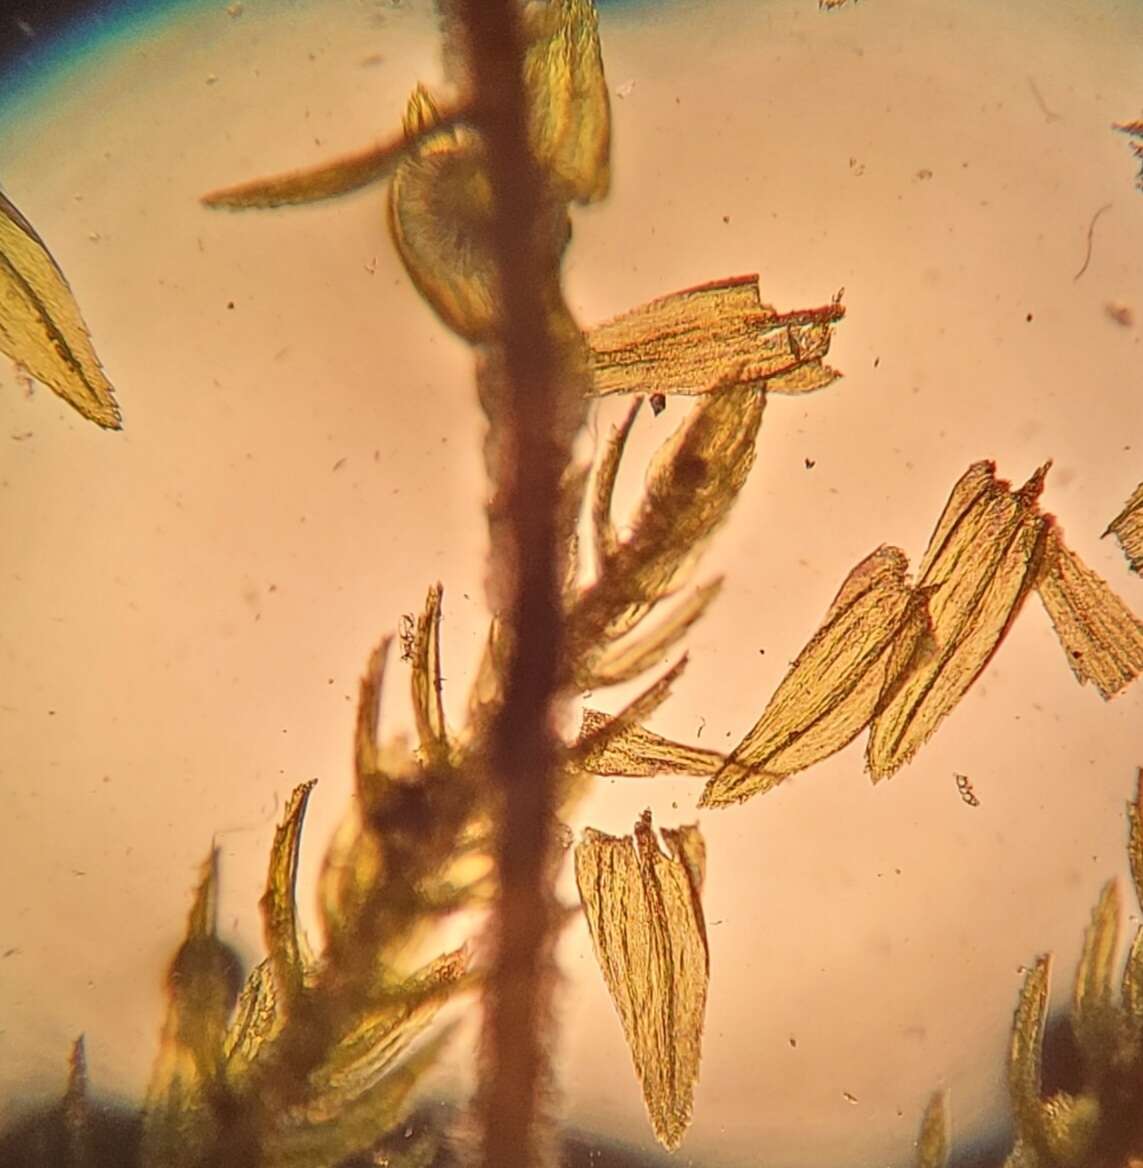 Image of pleuroziopsis moss